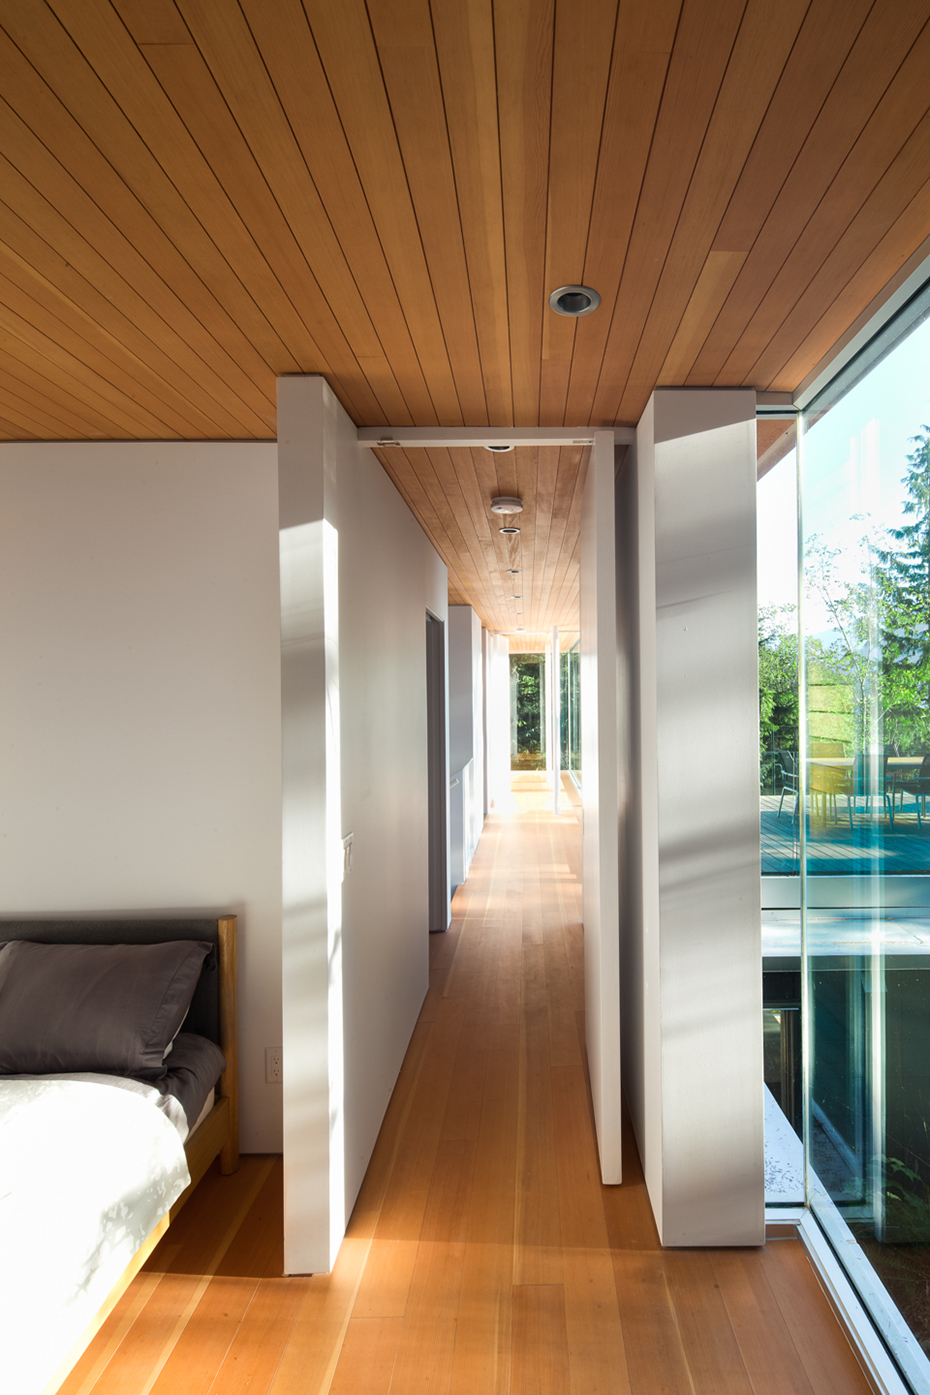 office of mcfarlane biggar architects + designers, Gambier Island, British Columbia, Canada, Gambier House